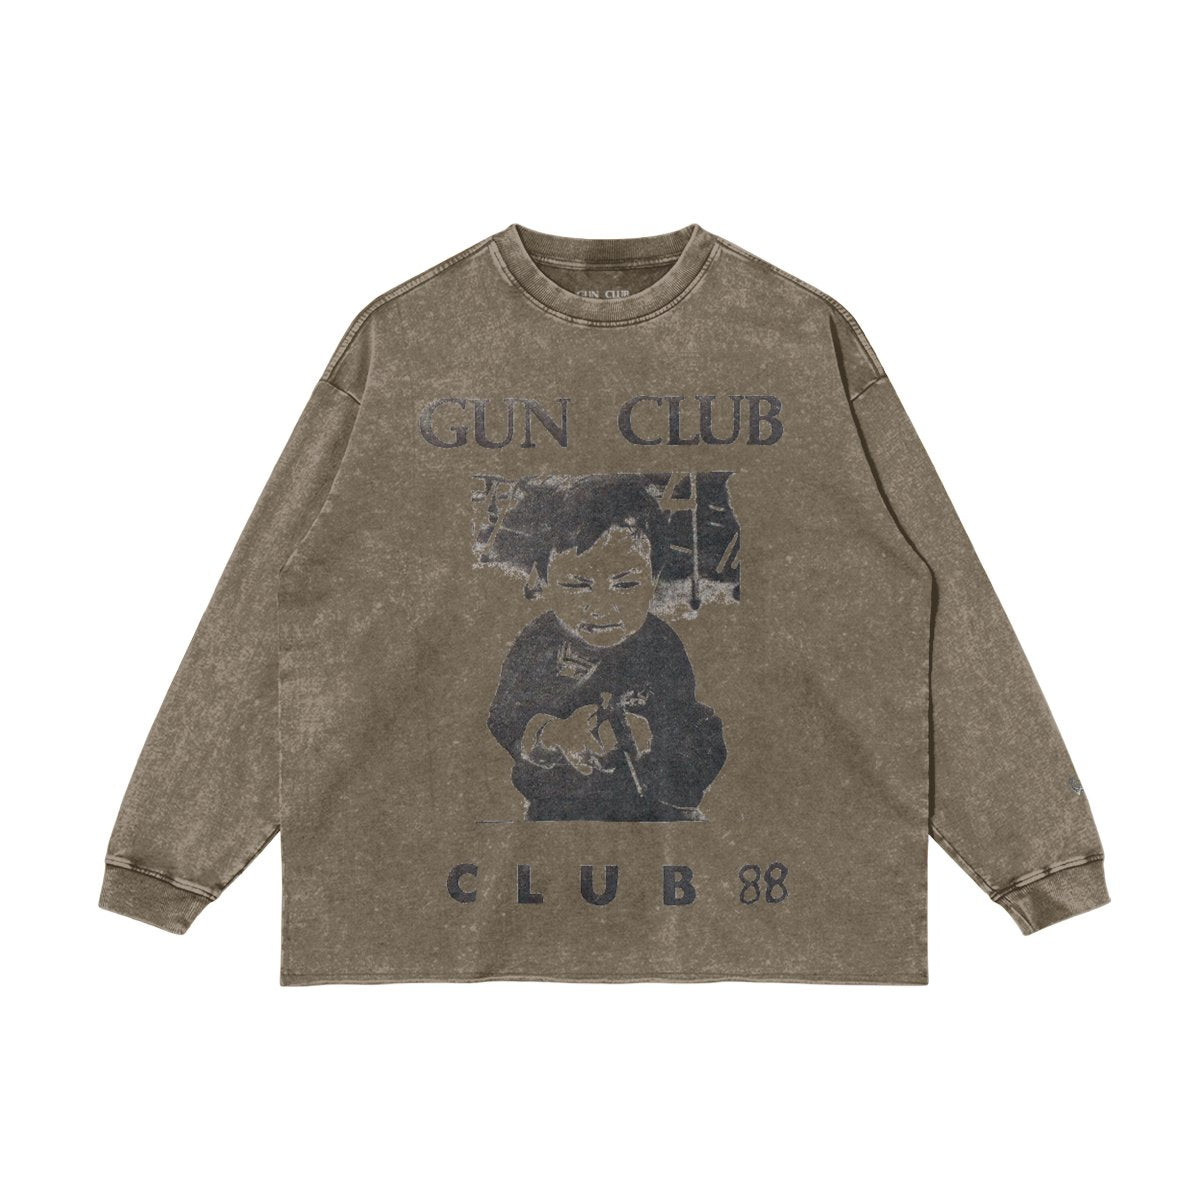 "Gun Club" L/s